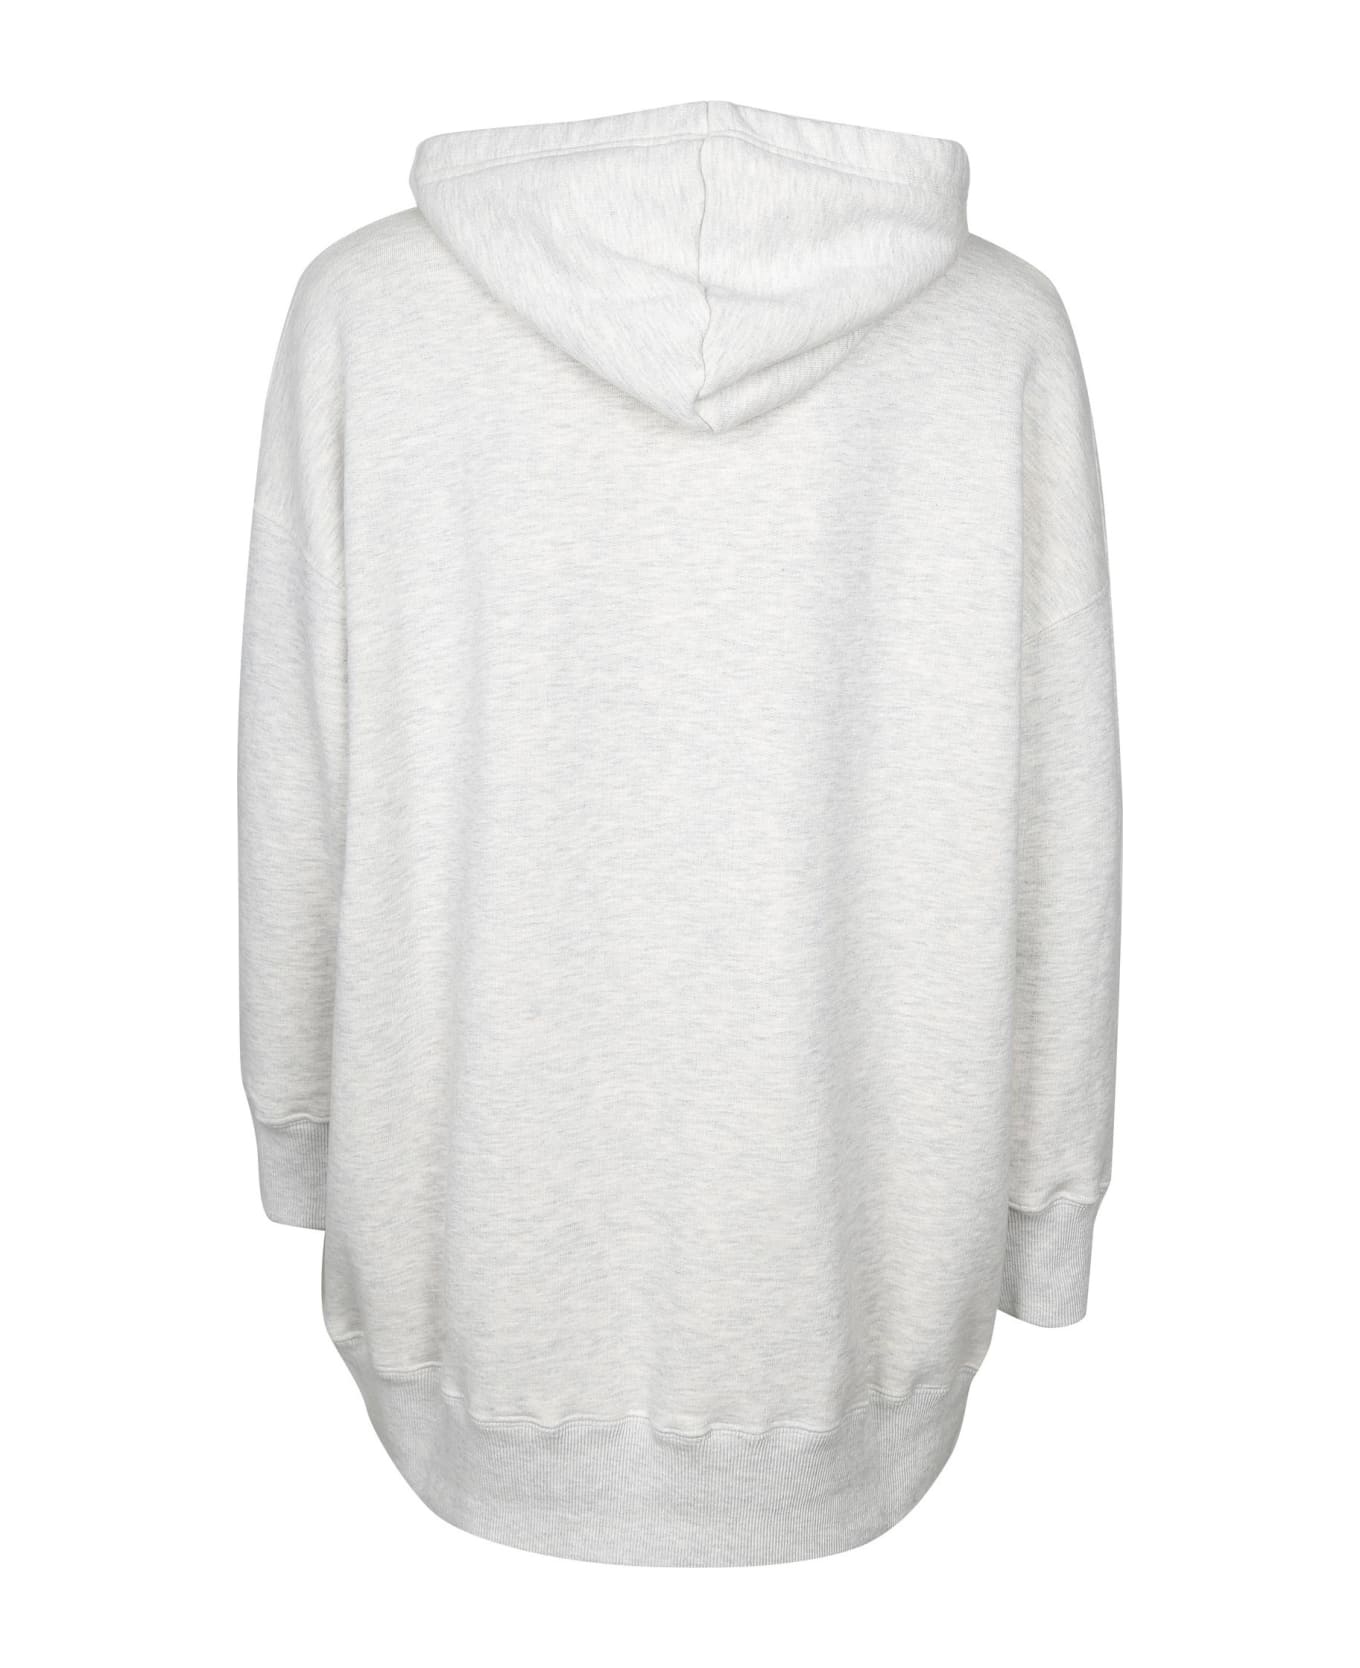 Autry Cotton Hoodie Sweatshirt With Logo - MELANGE